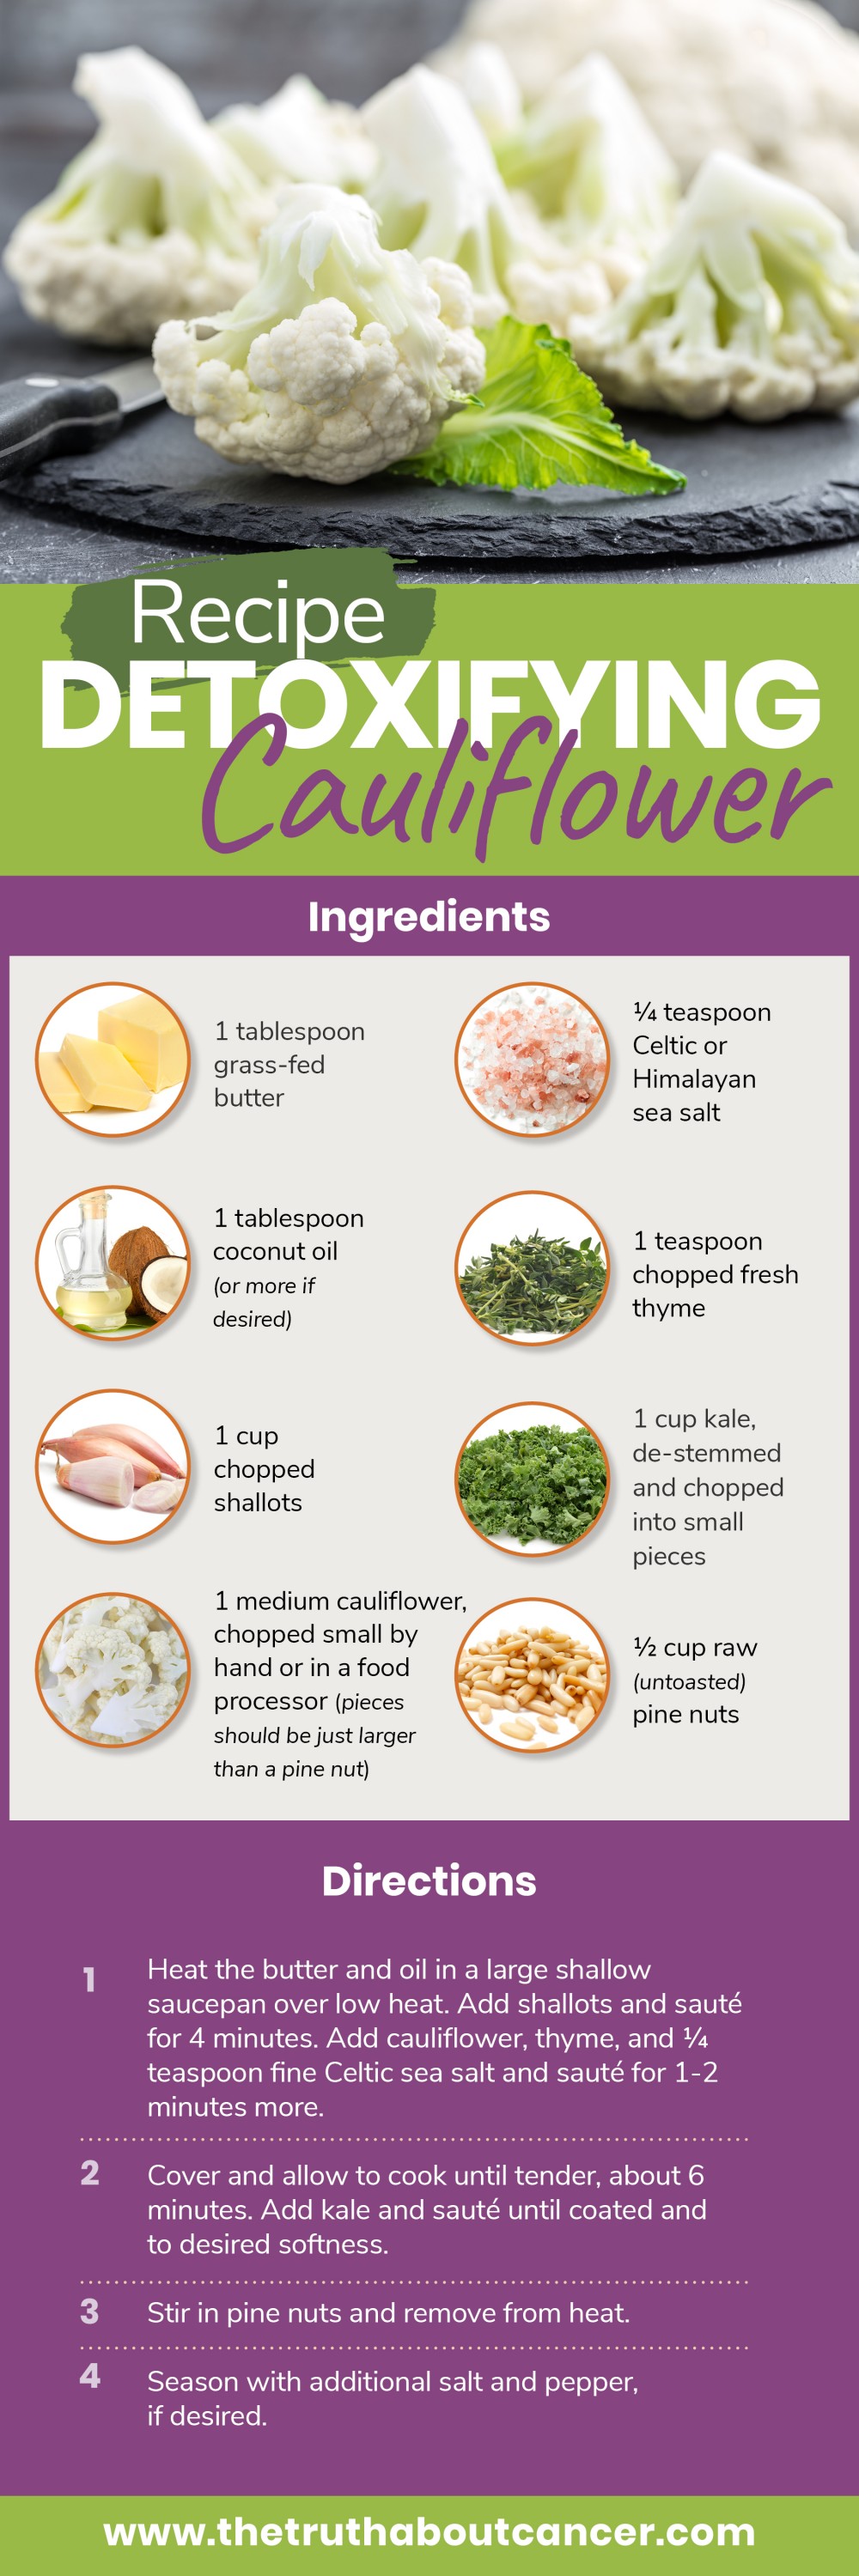 detoxifying cauliflower recipe infographic